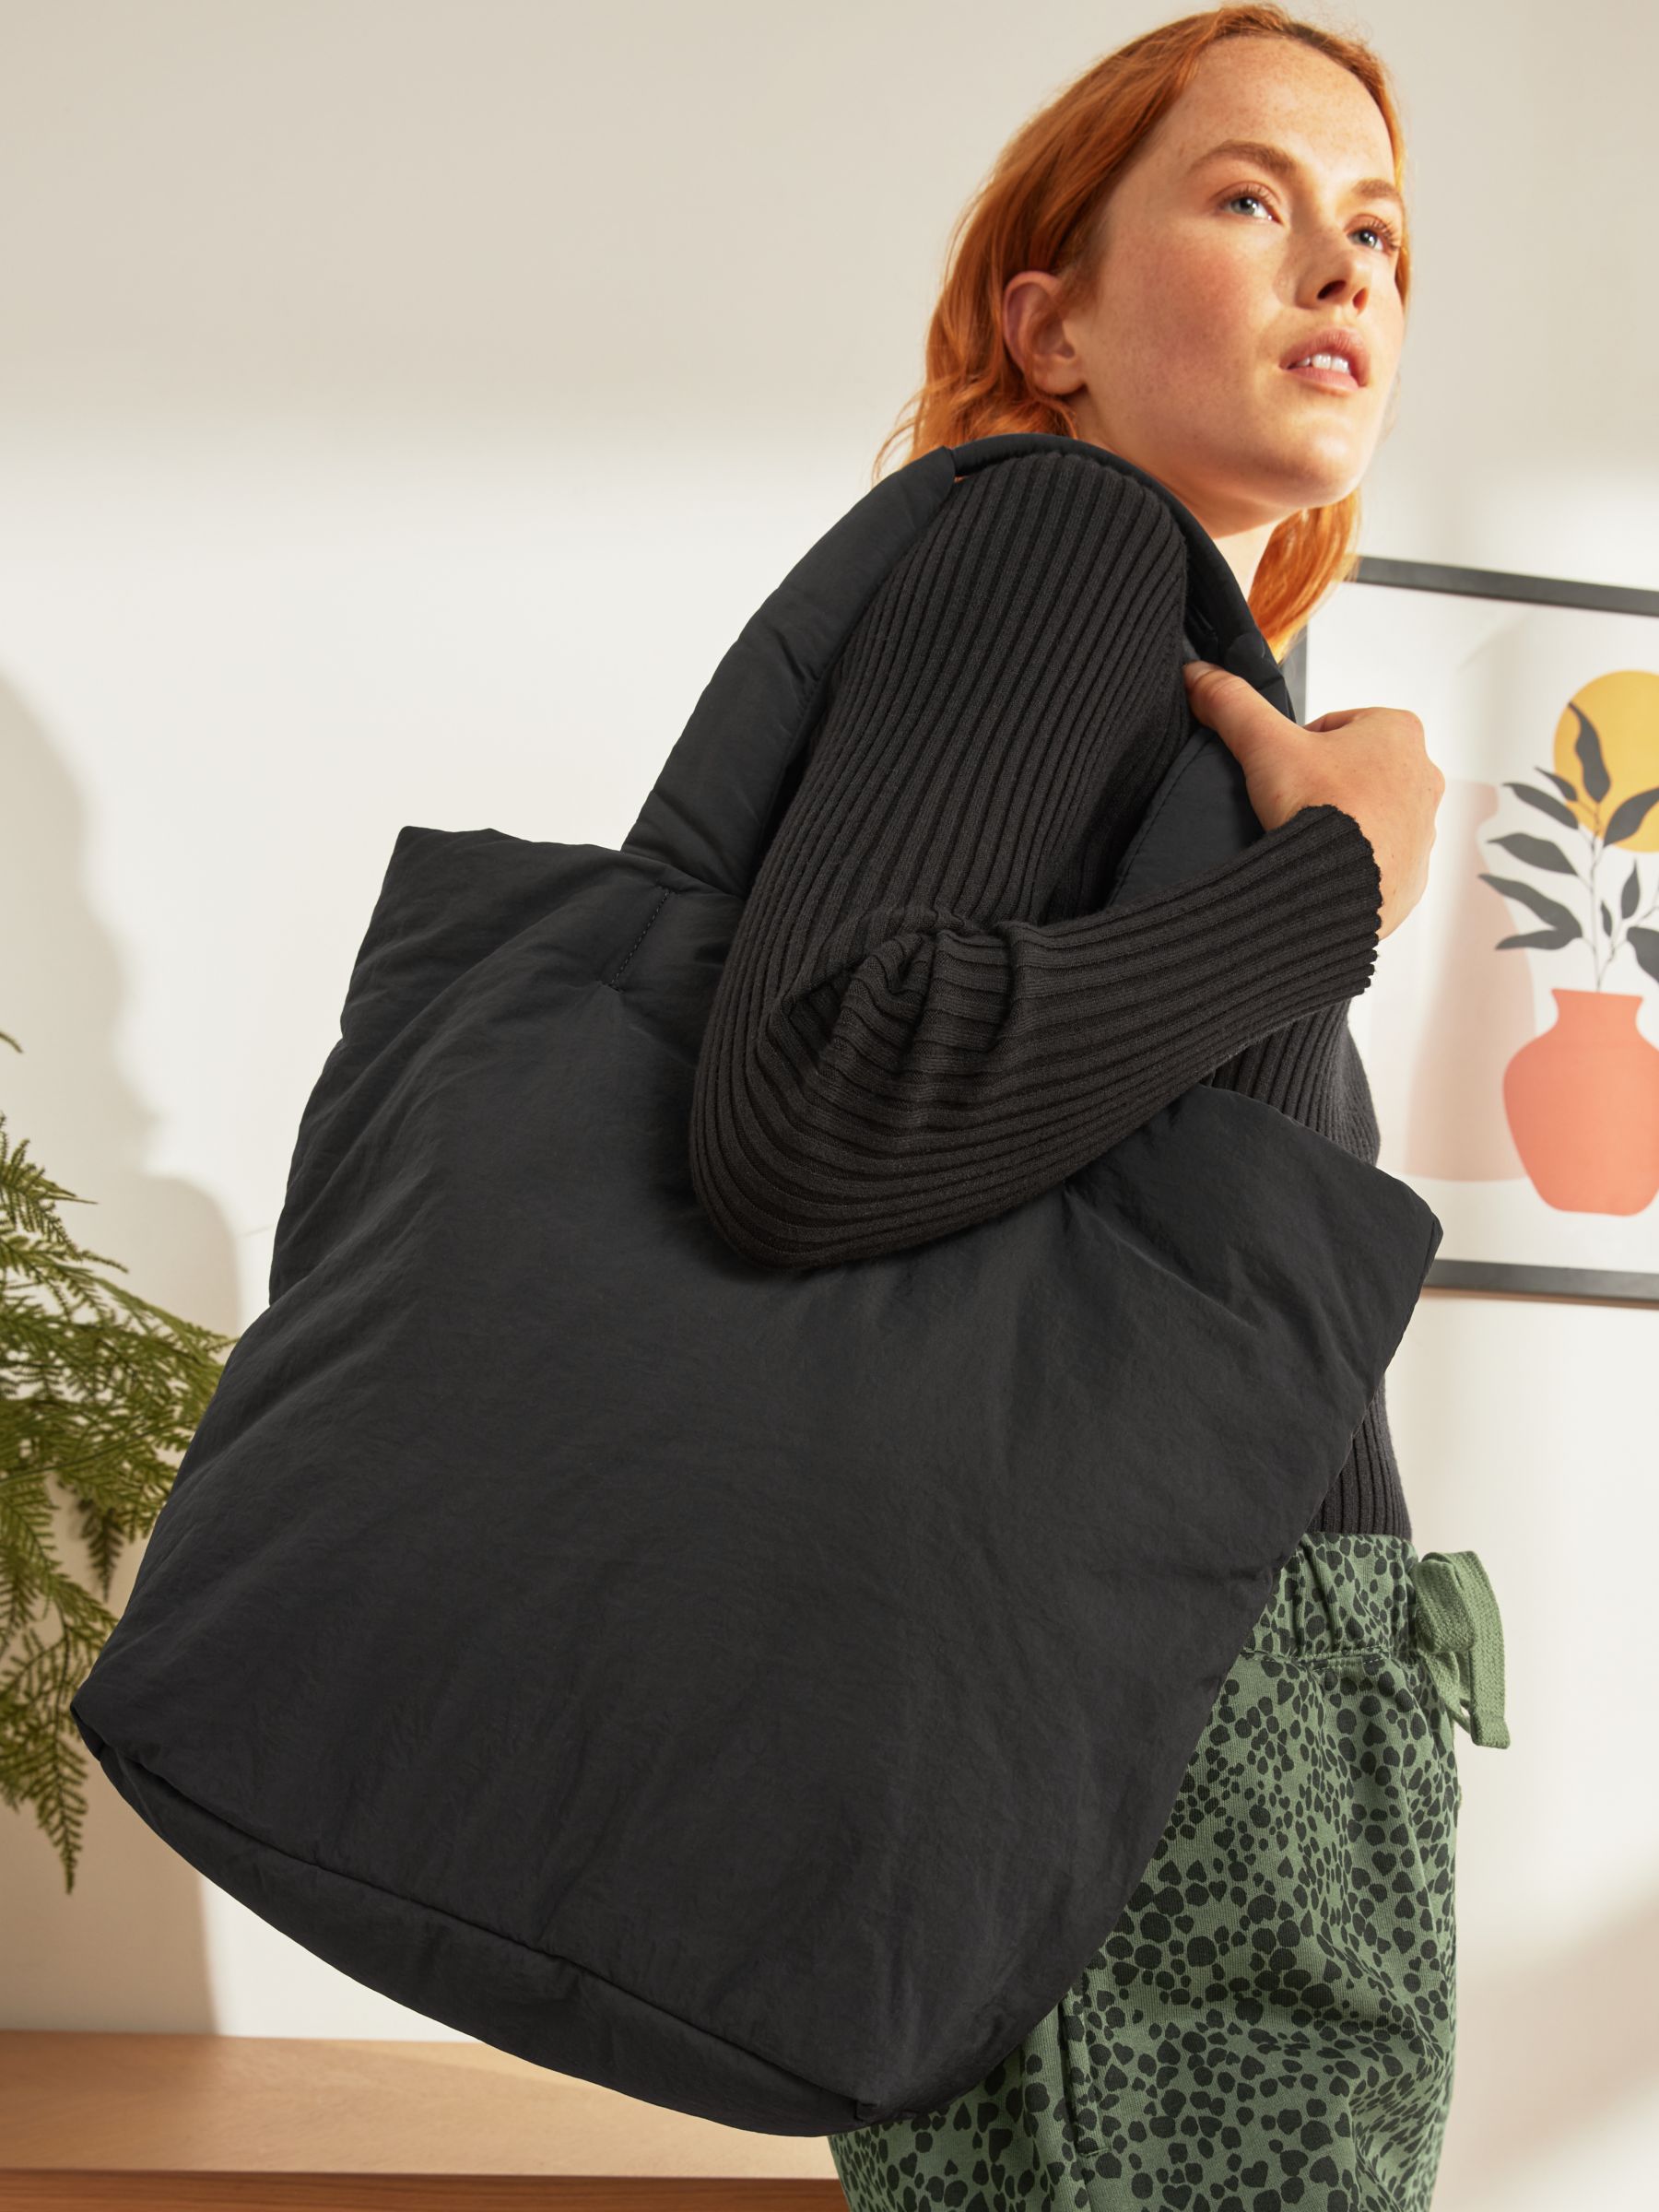 Sweaty Betty Multi Purpose Bag, Black at John Lewis & Partners